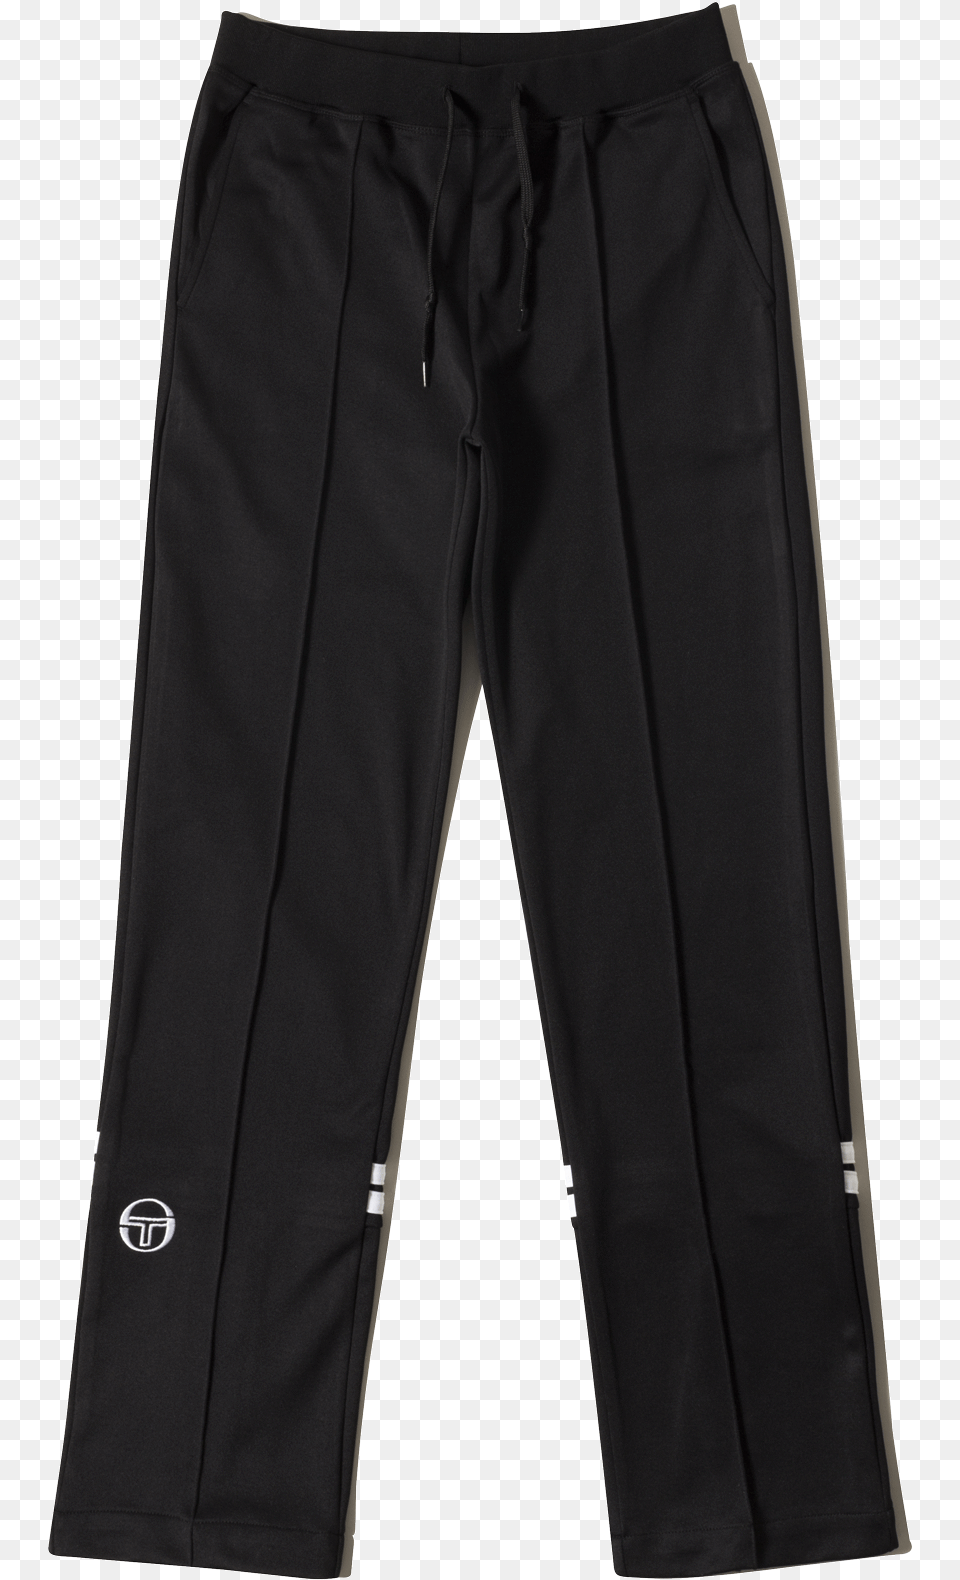 Black Jeans Transparent Background, Clothing, Pants, Shorts, Coat Png Image